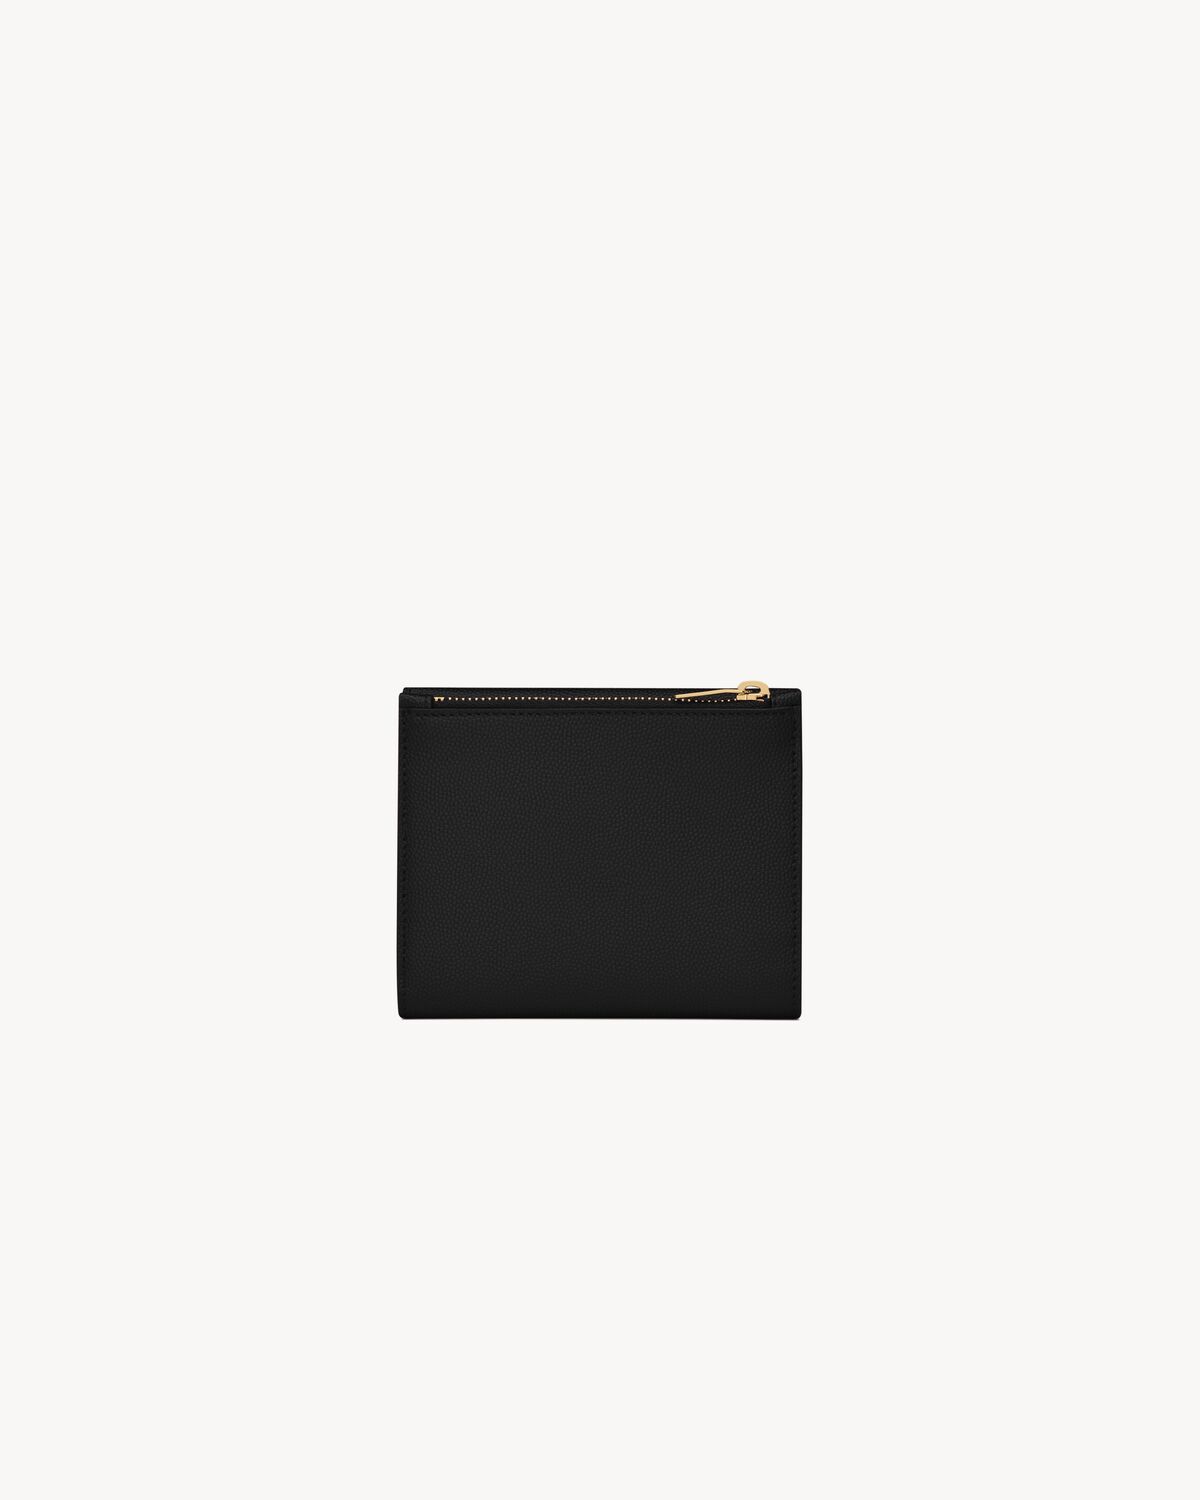 UPTOWN Compact wallet in grain de poudre leather